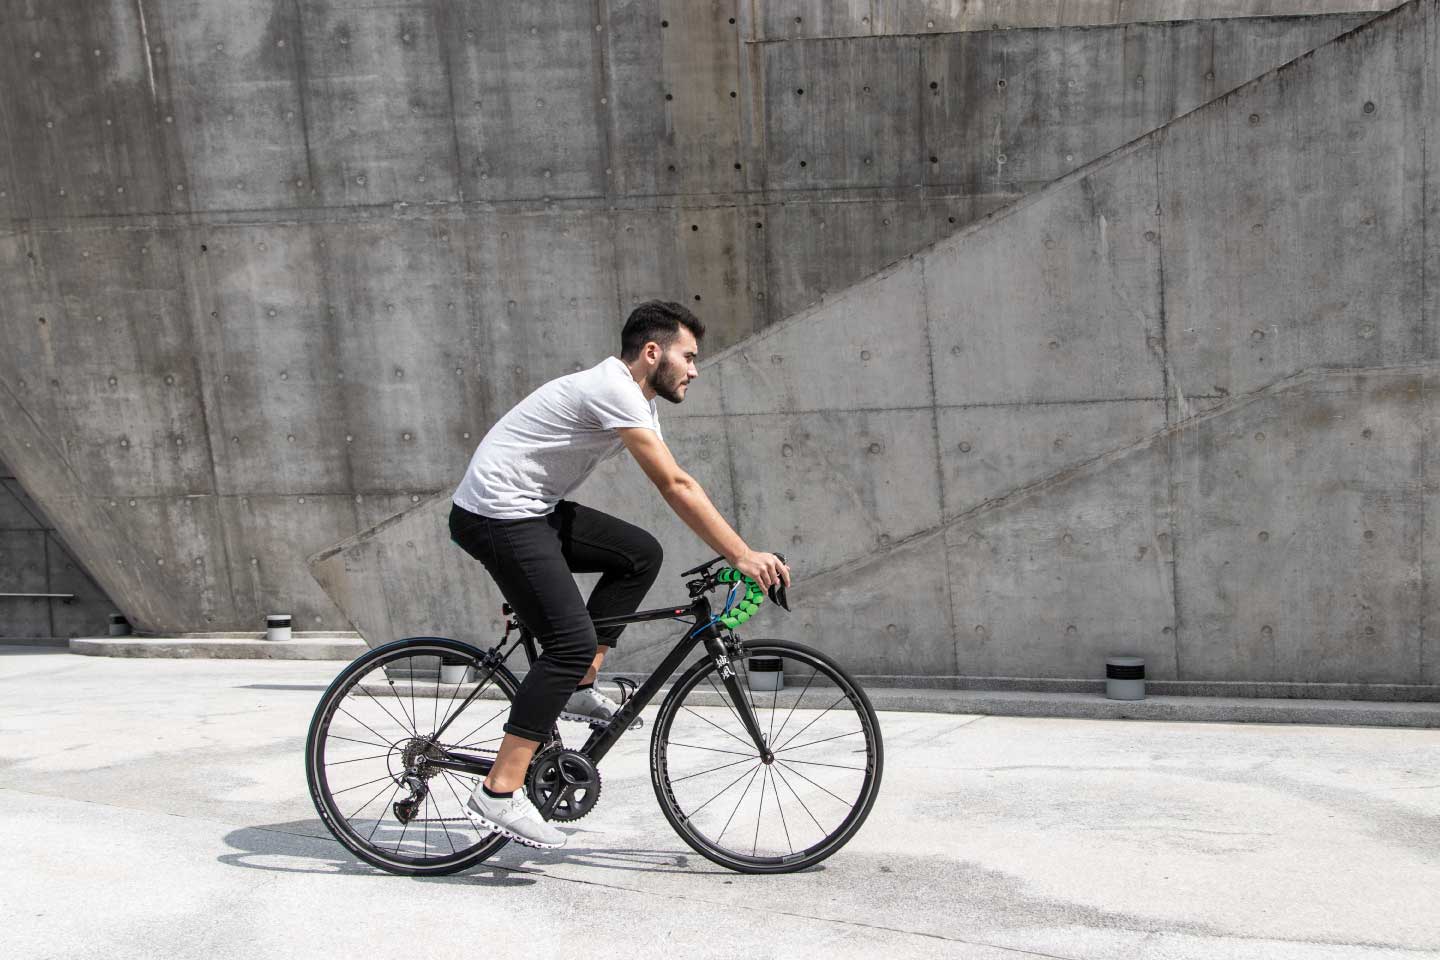 Kits Vélo - iPhone - Quad Lock® Europe - Magasin officiel